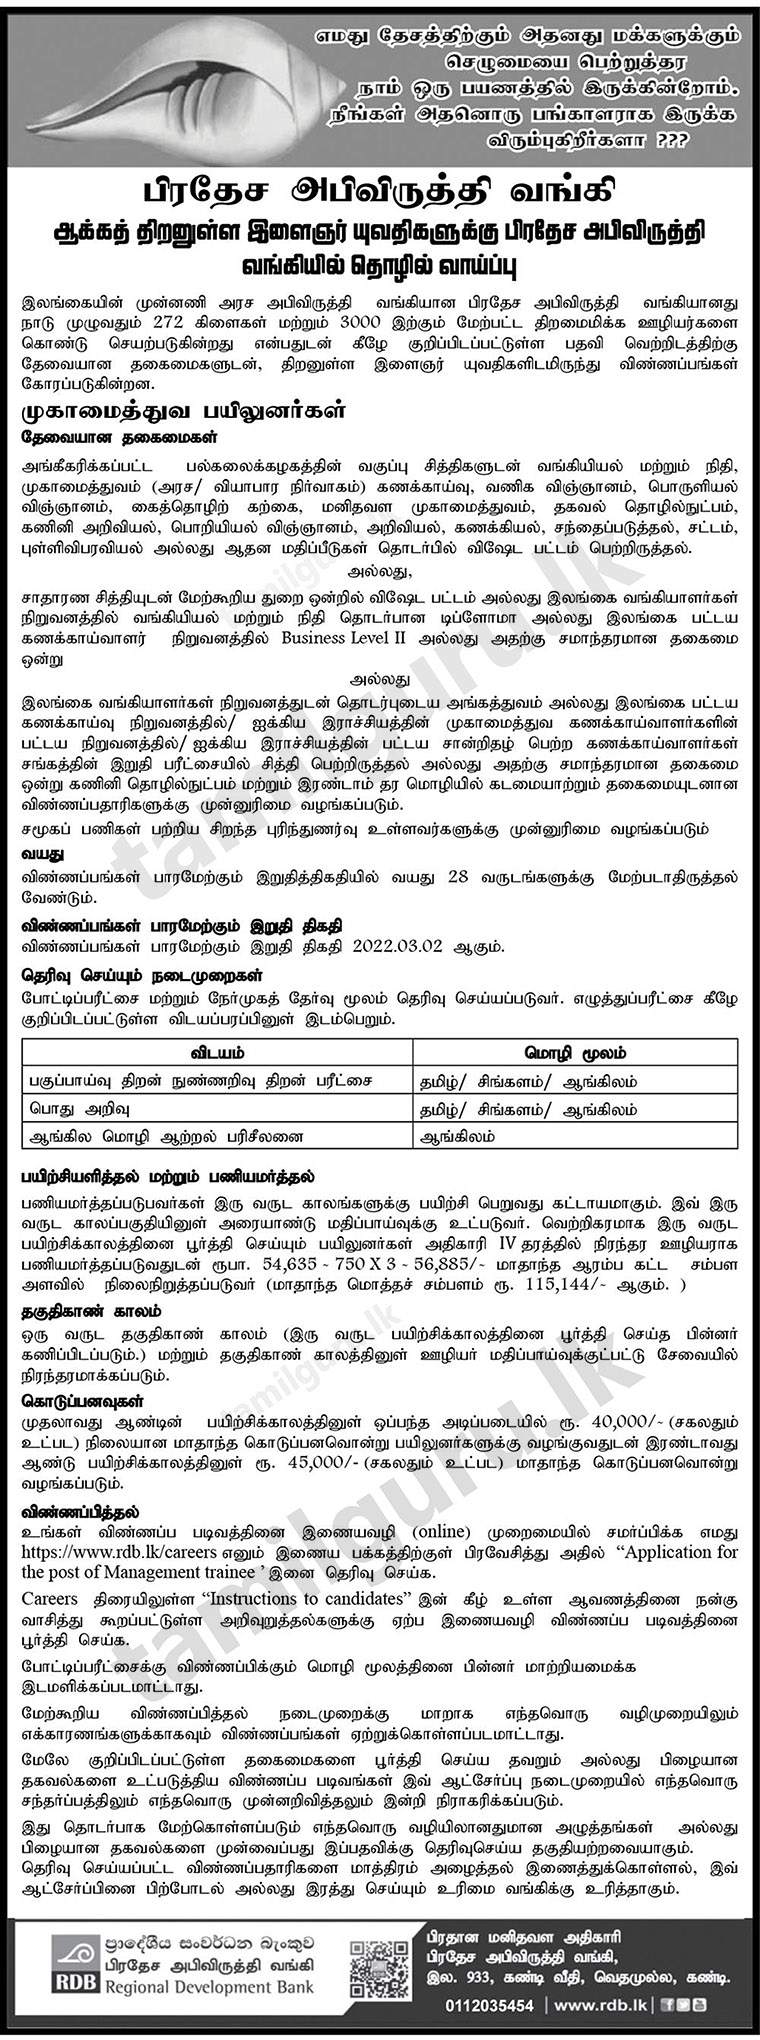 Regional Development Bank (RDB) Management Trainee Vacancies 2022 - Notice in Tamil